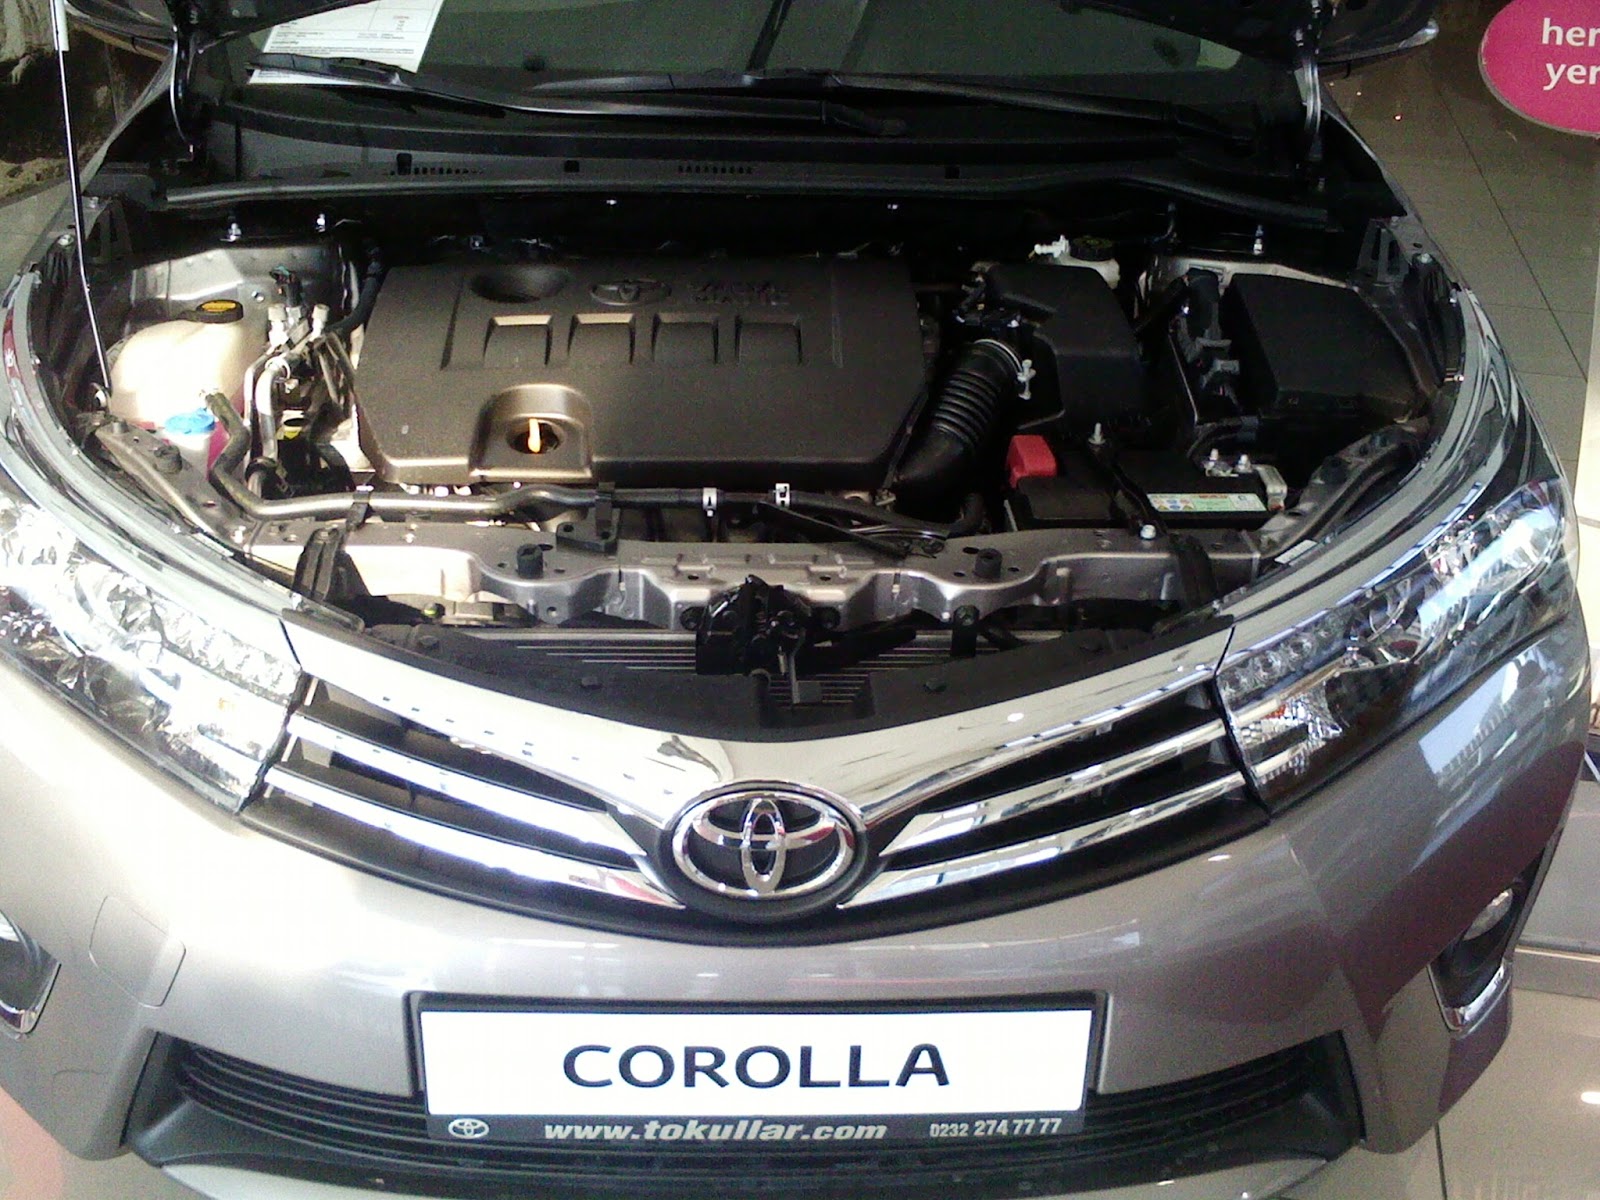 Открыть капот королла. Toyota Corolla 2014 подкапотка. Toyota Corolla 2014 под капотом. Тойота Королла 2014 под капотом. Тойота Королла 2016 открытый капот.